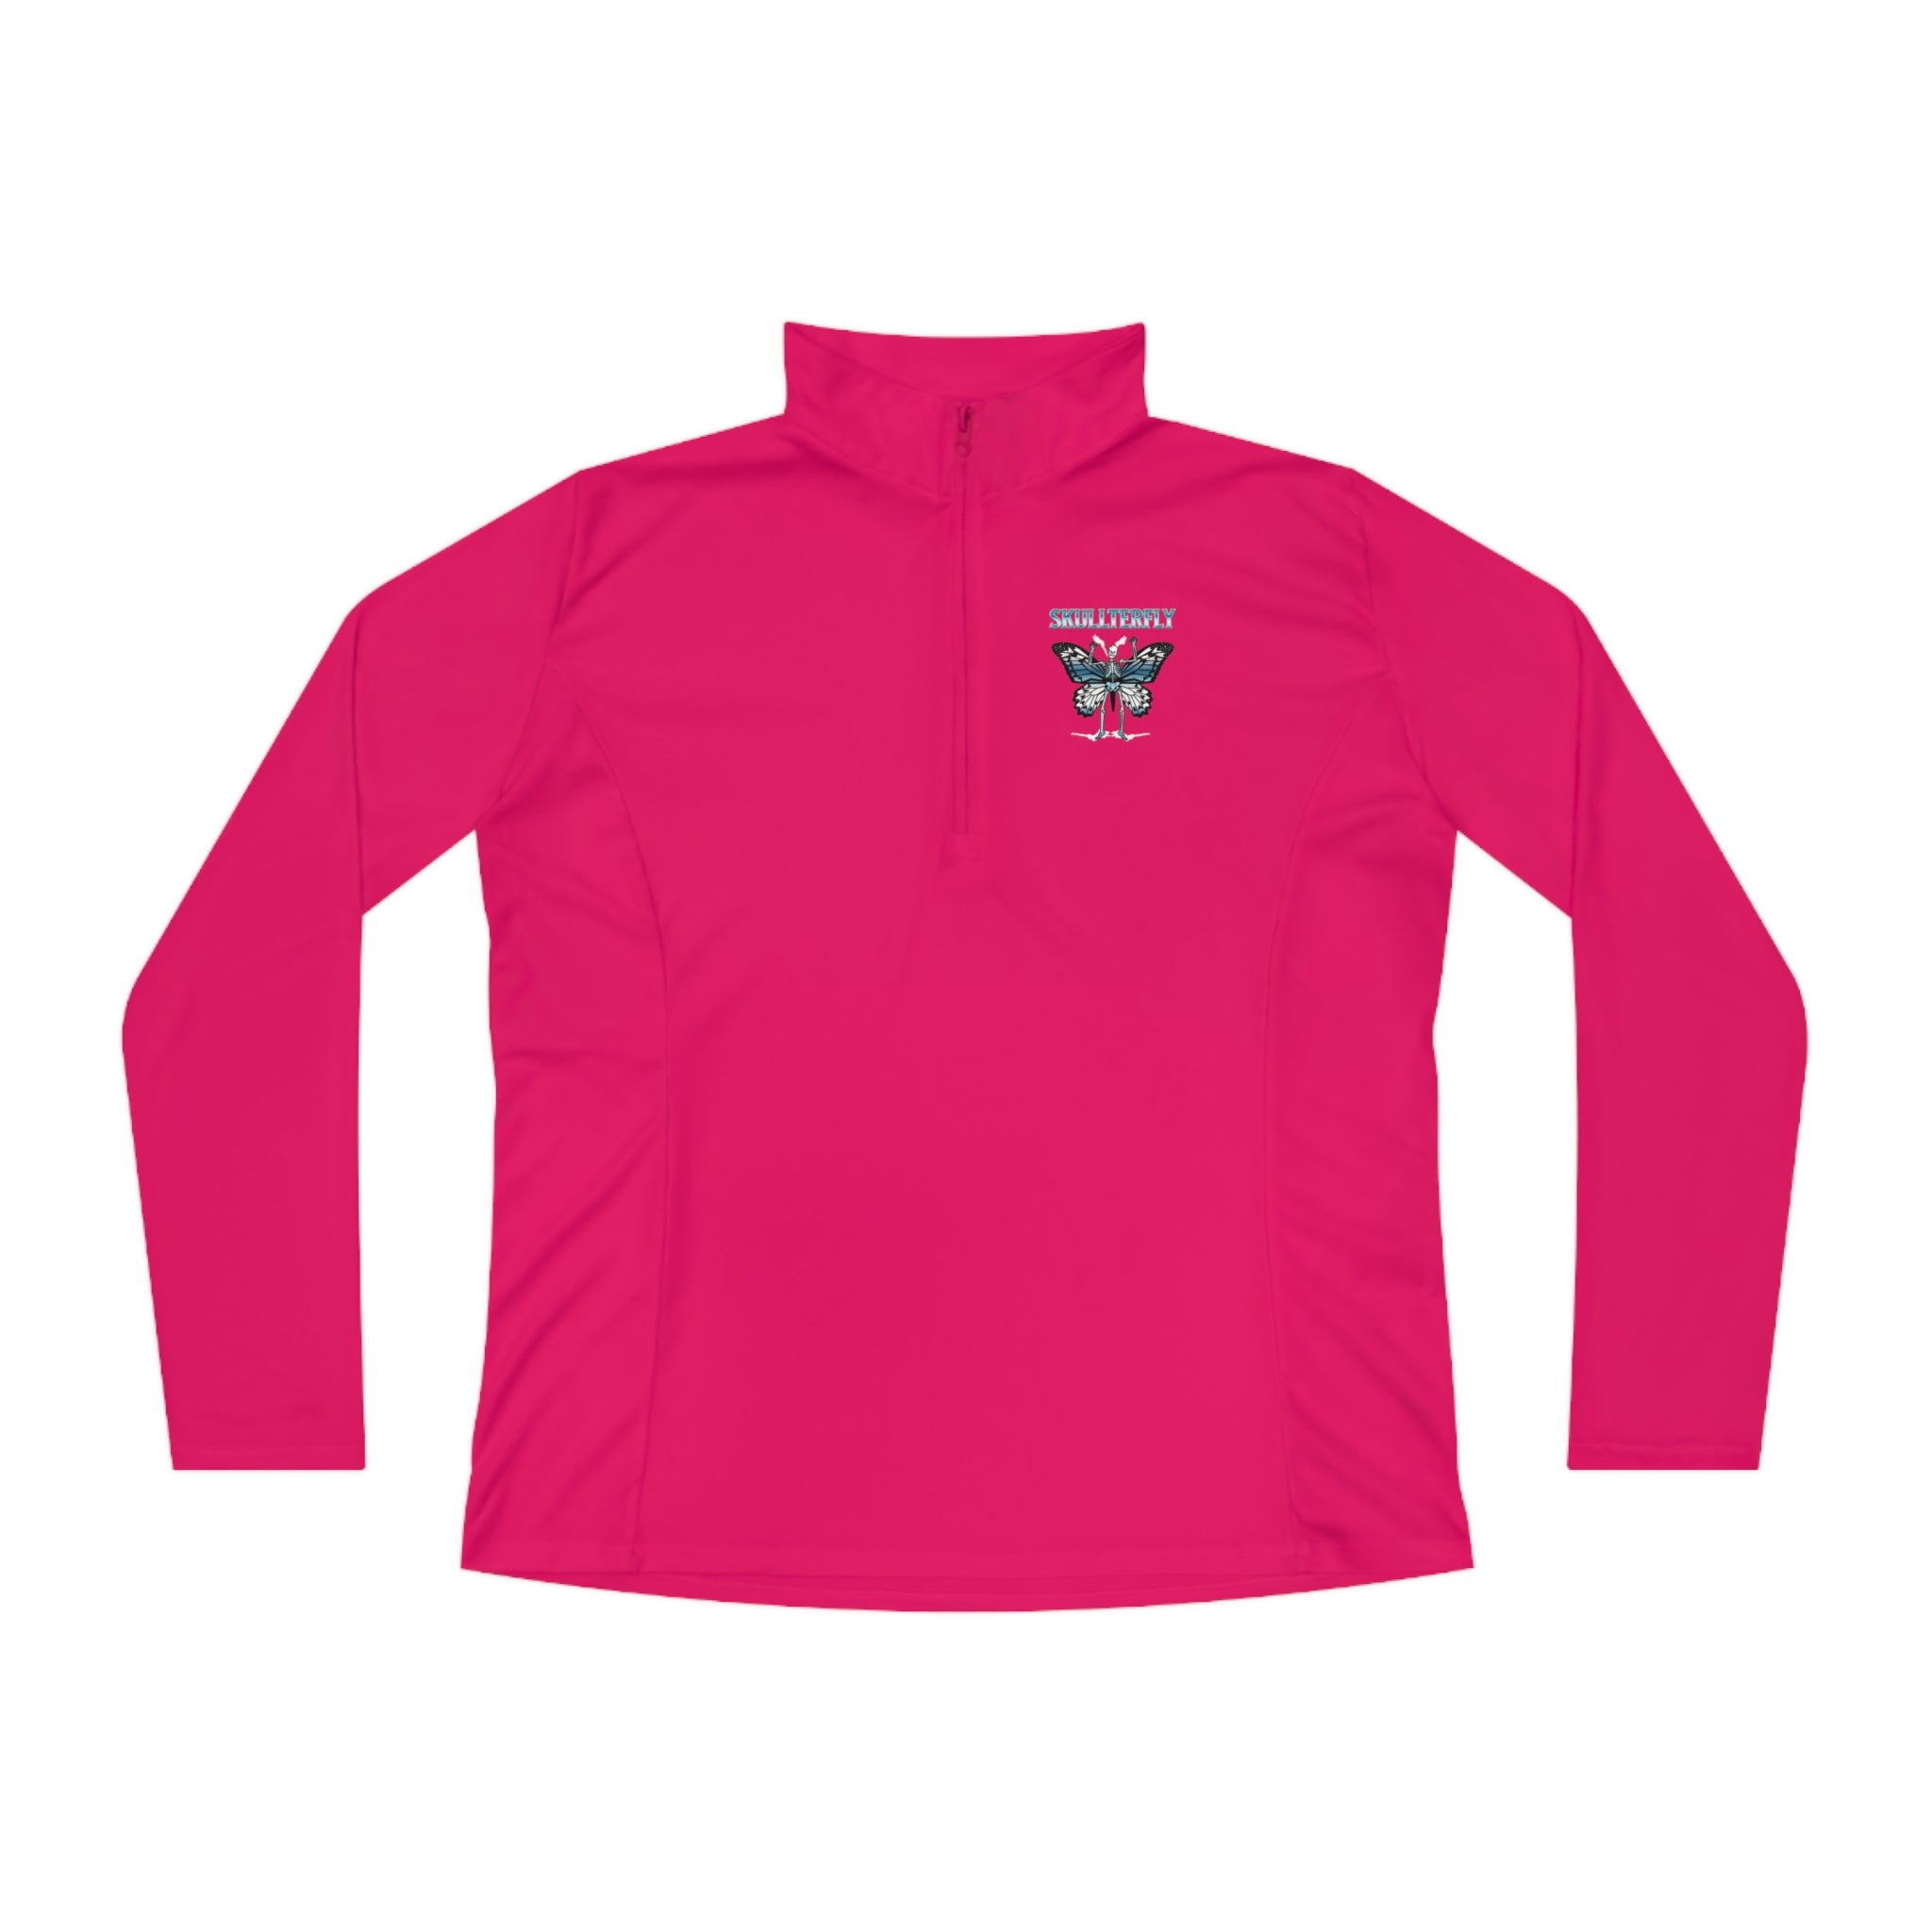 SORTYGO - Skullterfly Women Quarter Zip Pullover in Pink Raspberry S